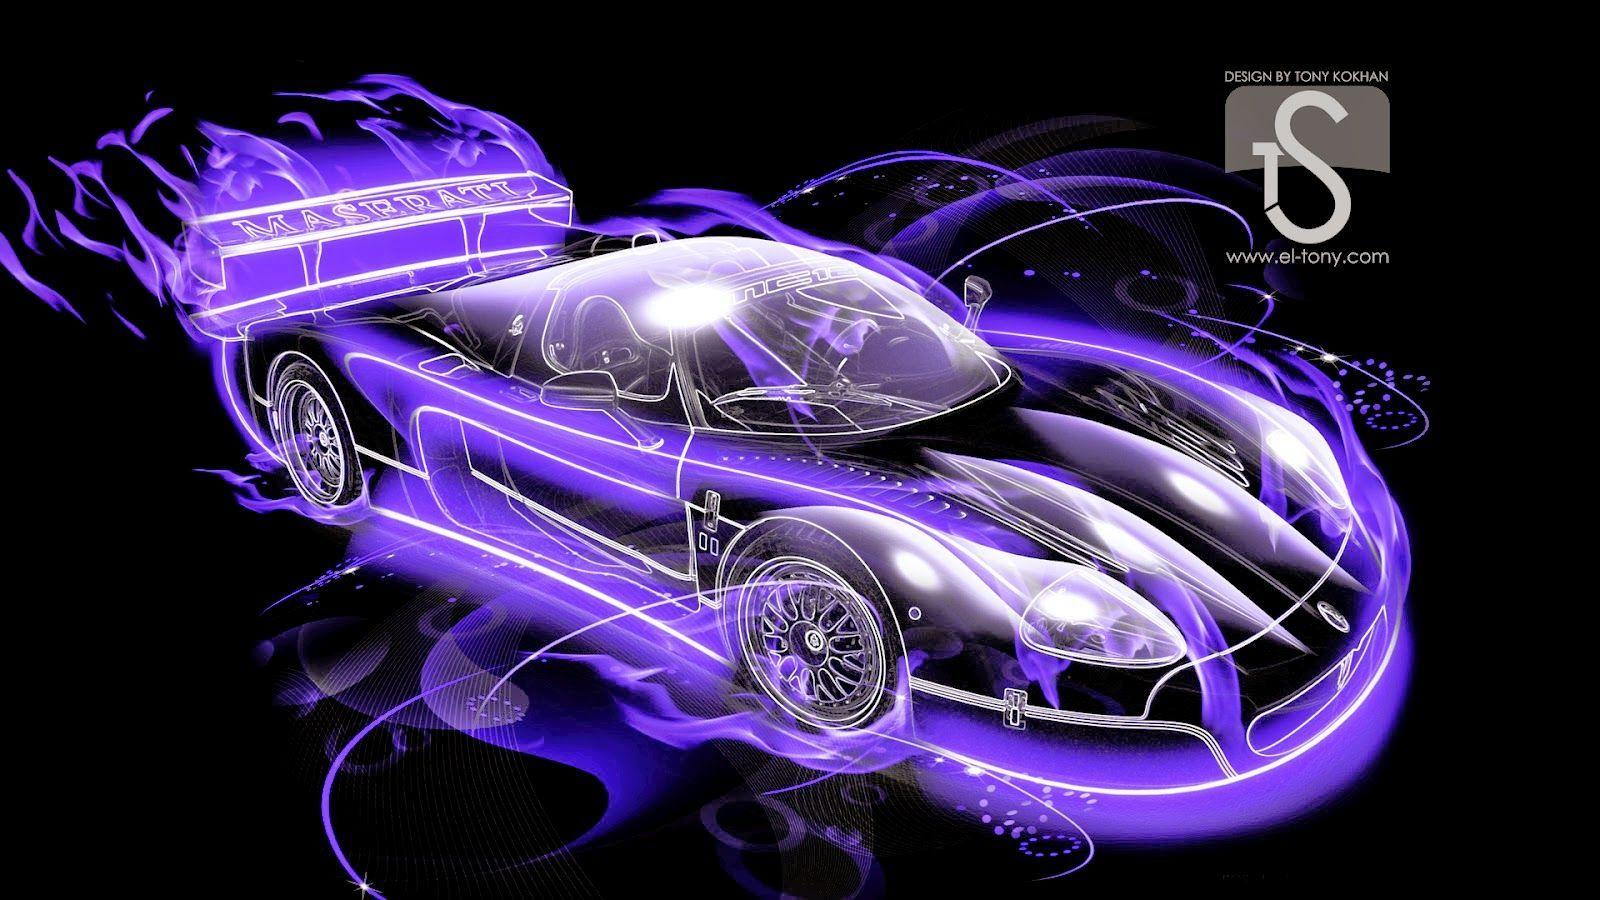 Fire 3D wallpaper of cars for desktop. Cool car picture, Car wallpaper, Cool wallpaper cars